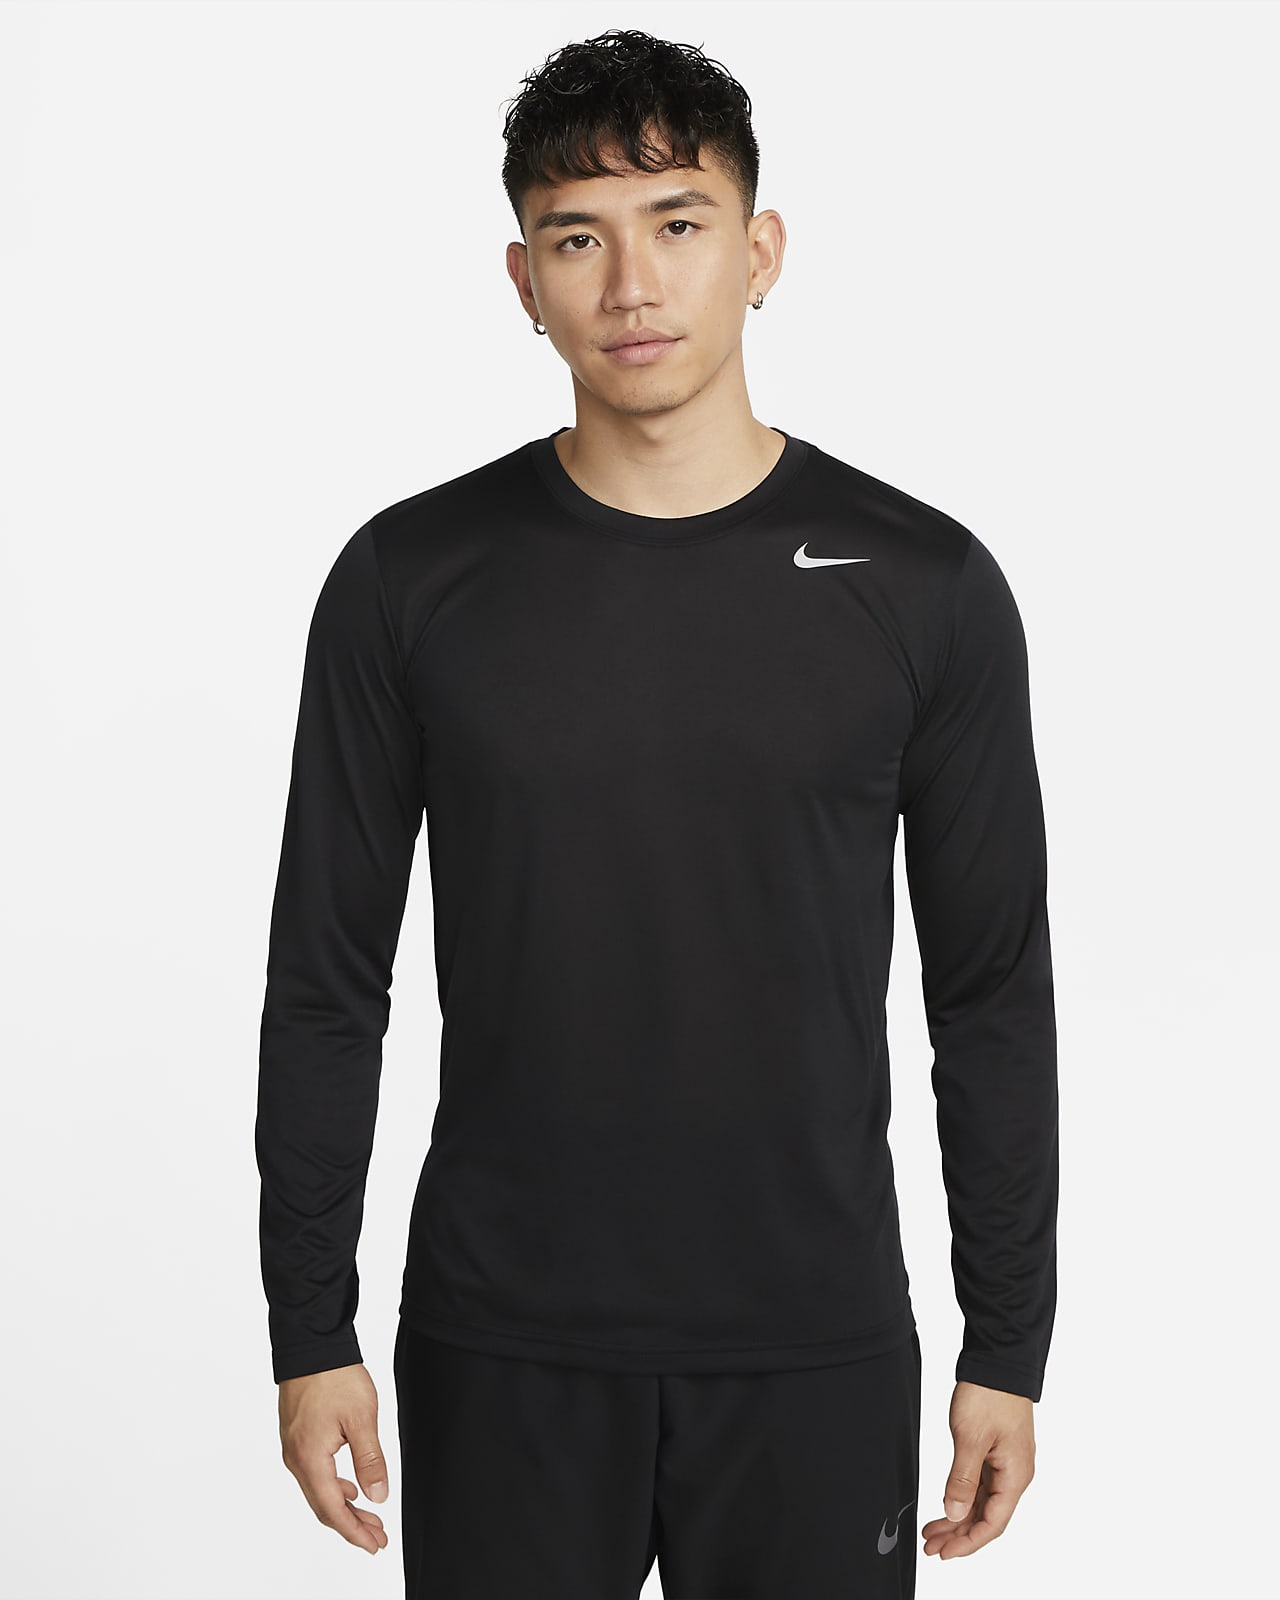 Men's Training & Gym Long Sleeve Shirts. Nike IN